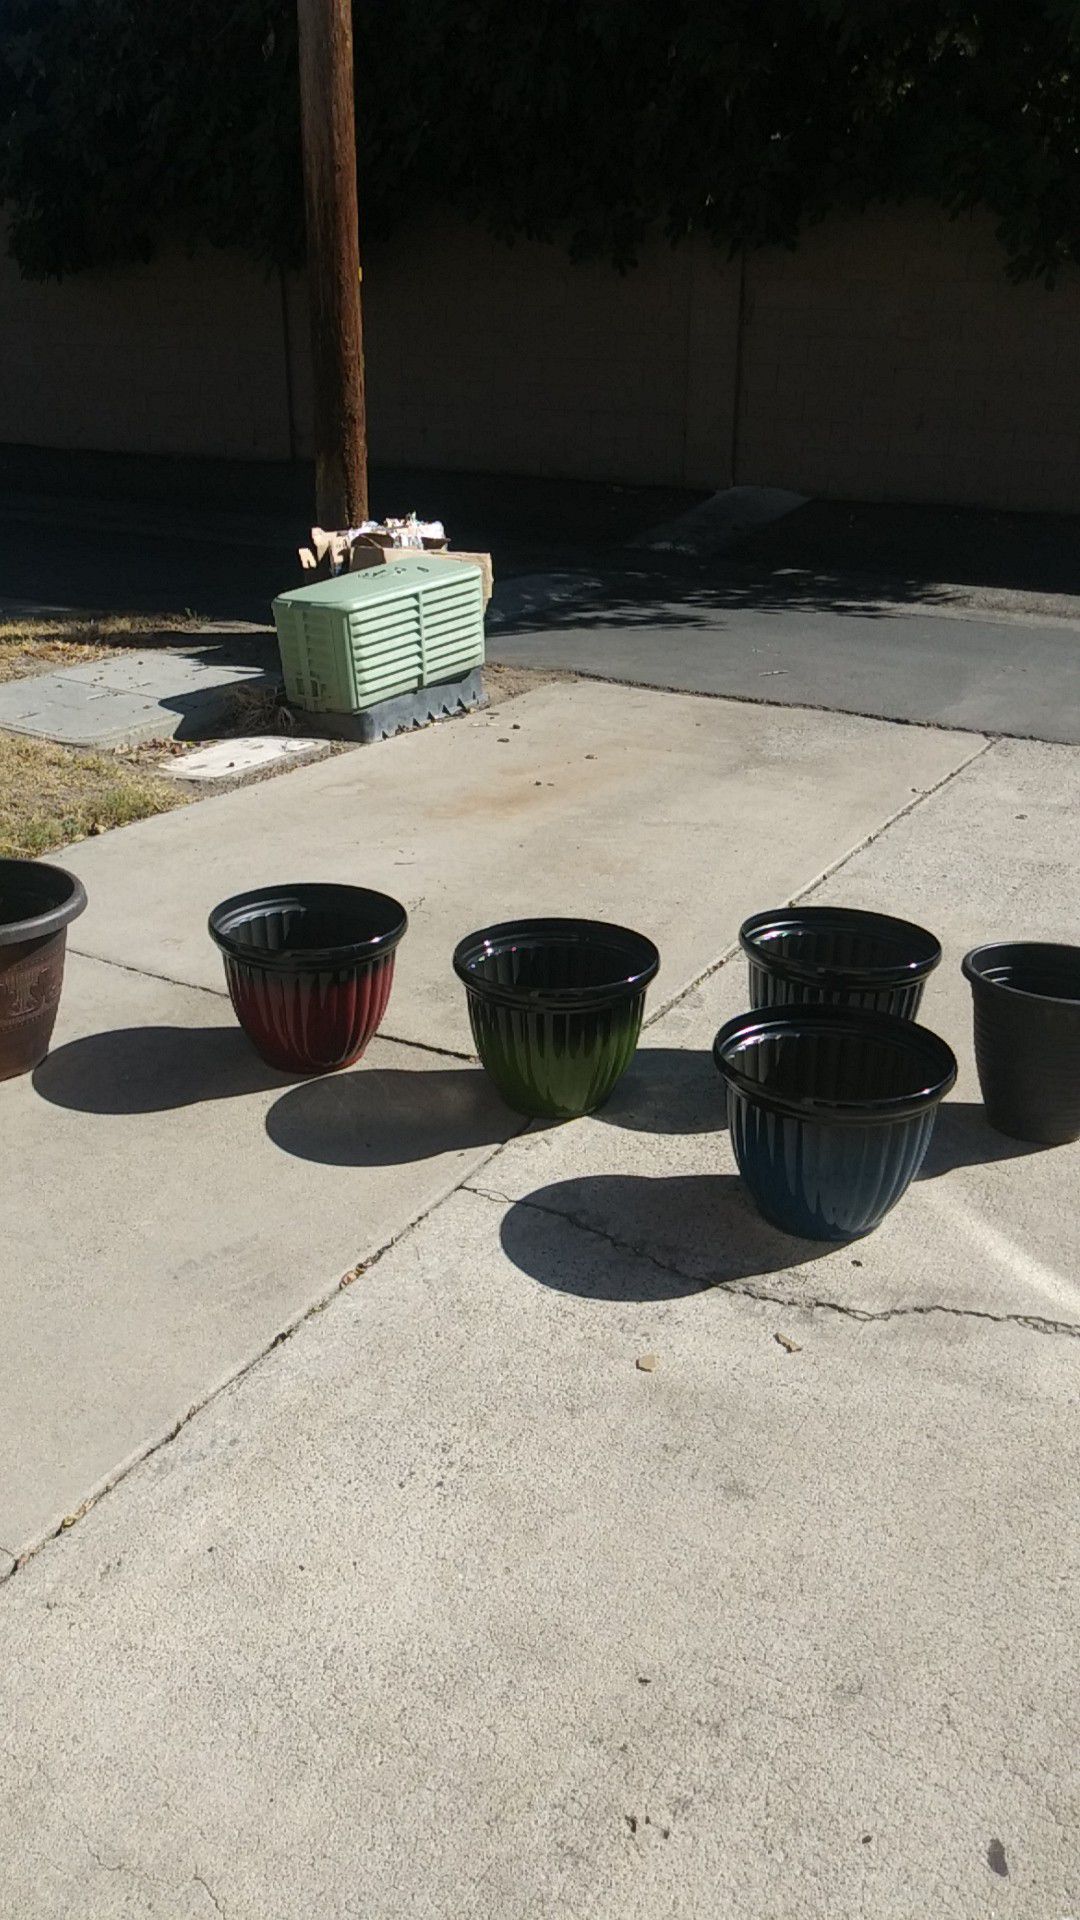 Brand new flower pots